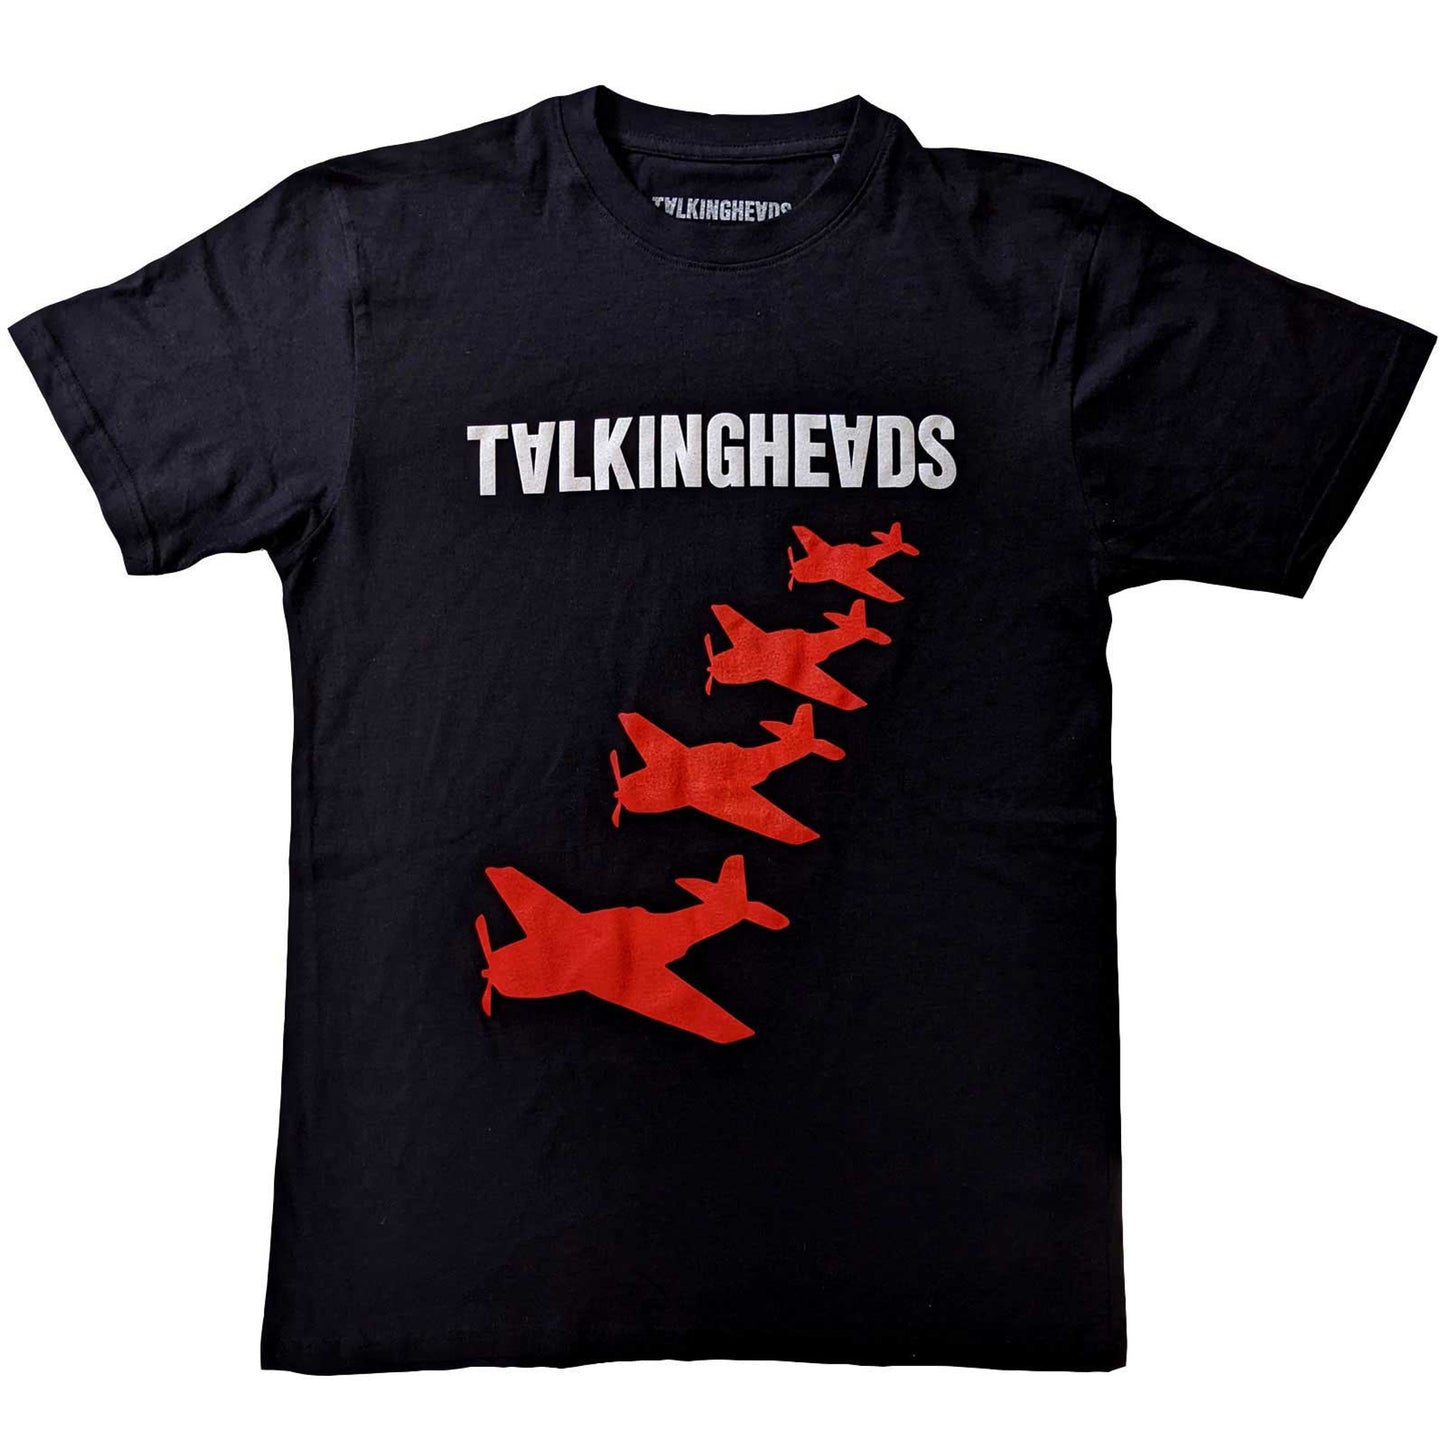 Talking Heads Airplane T-Shirt